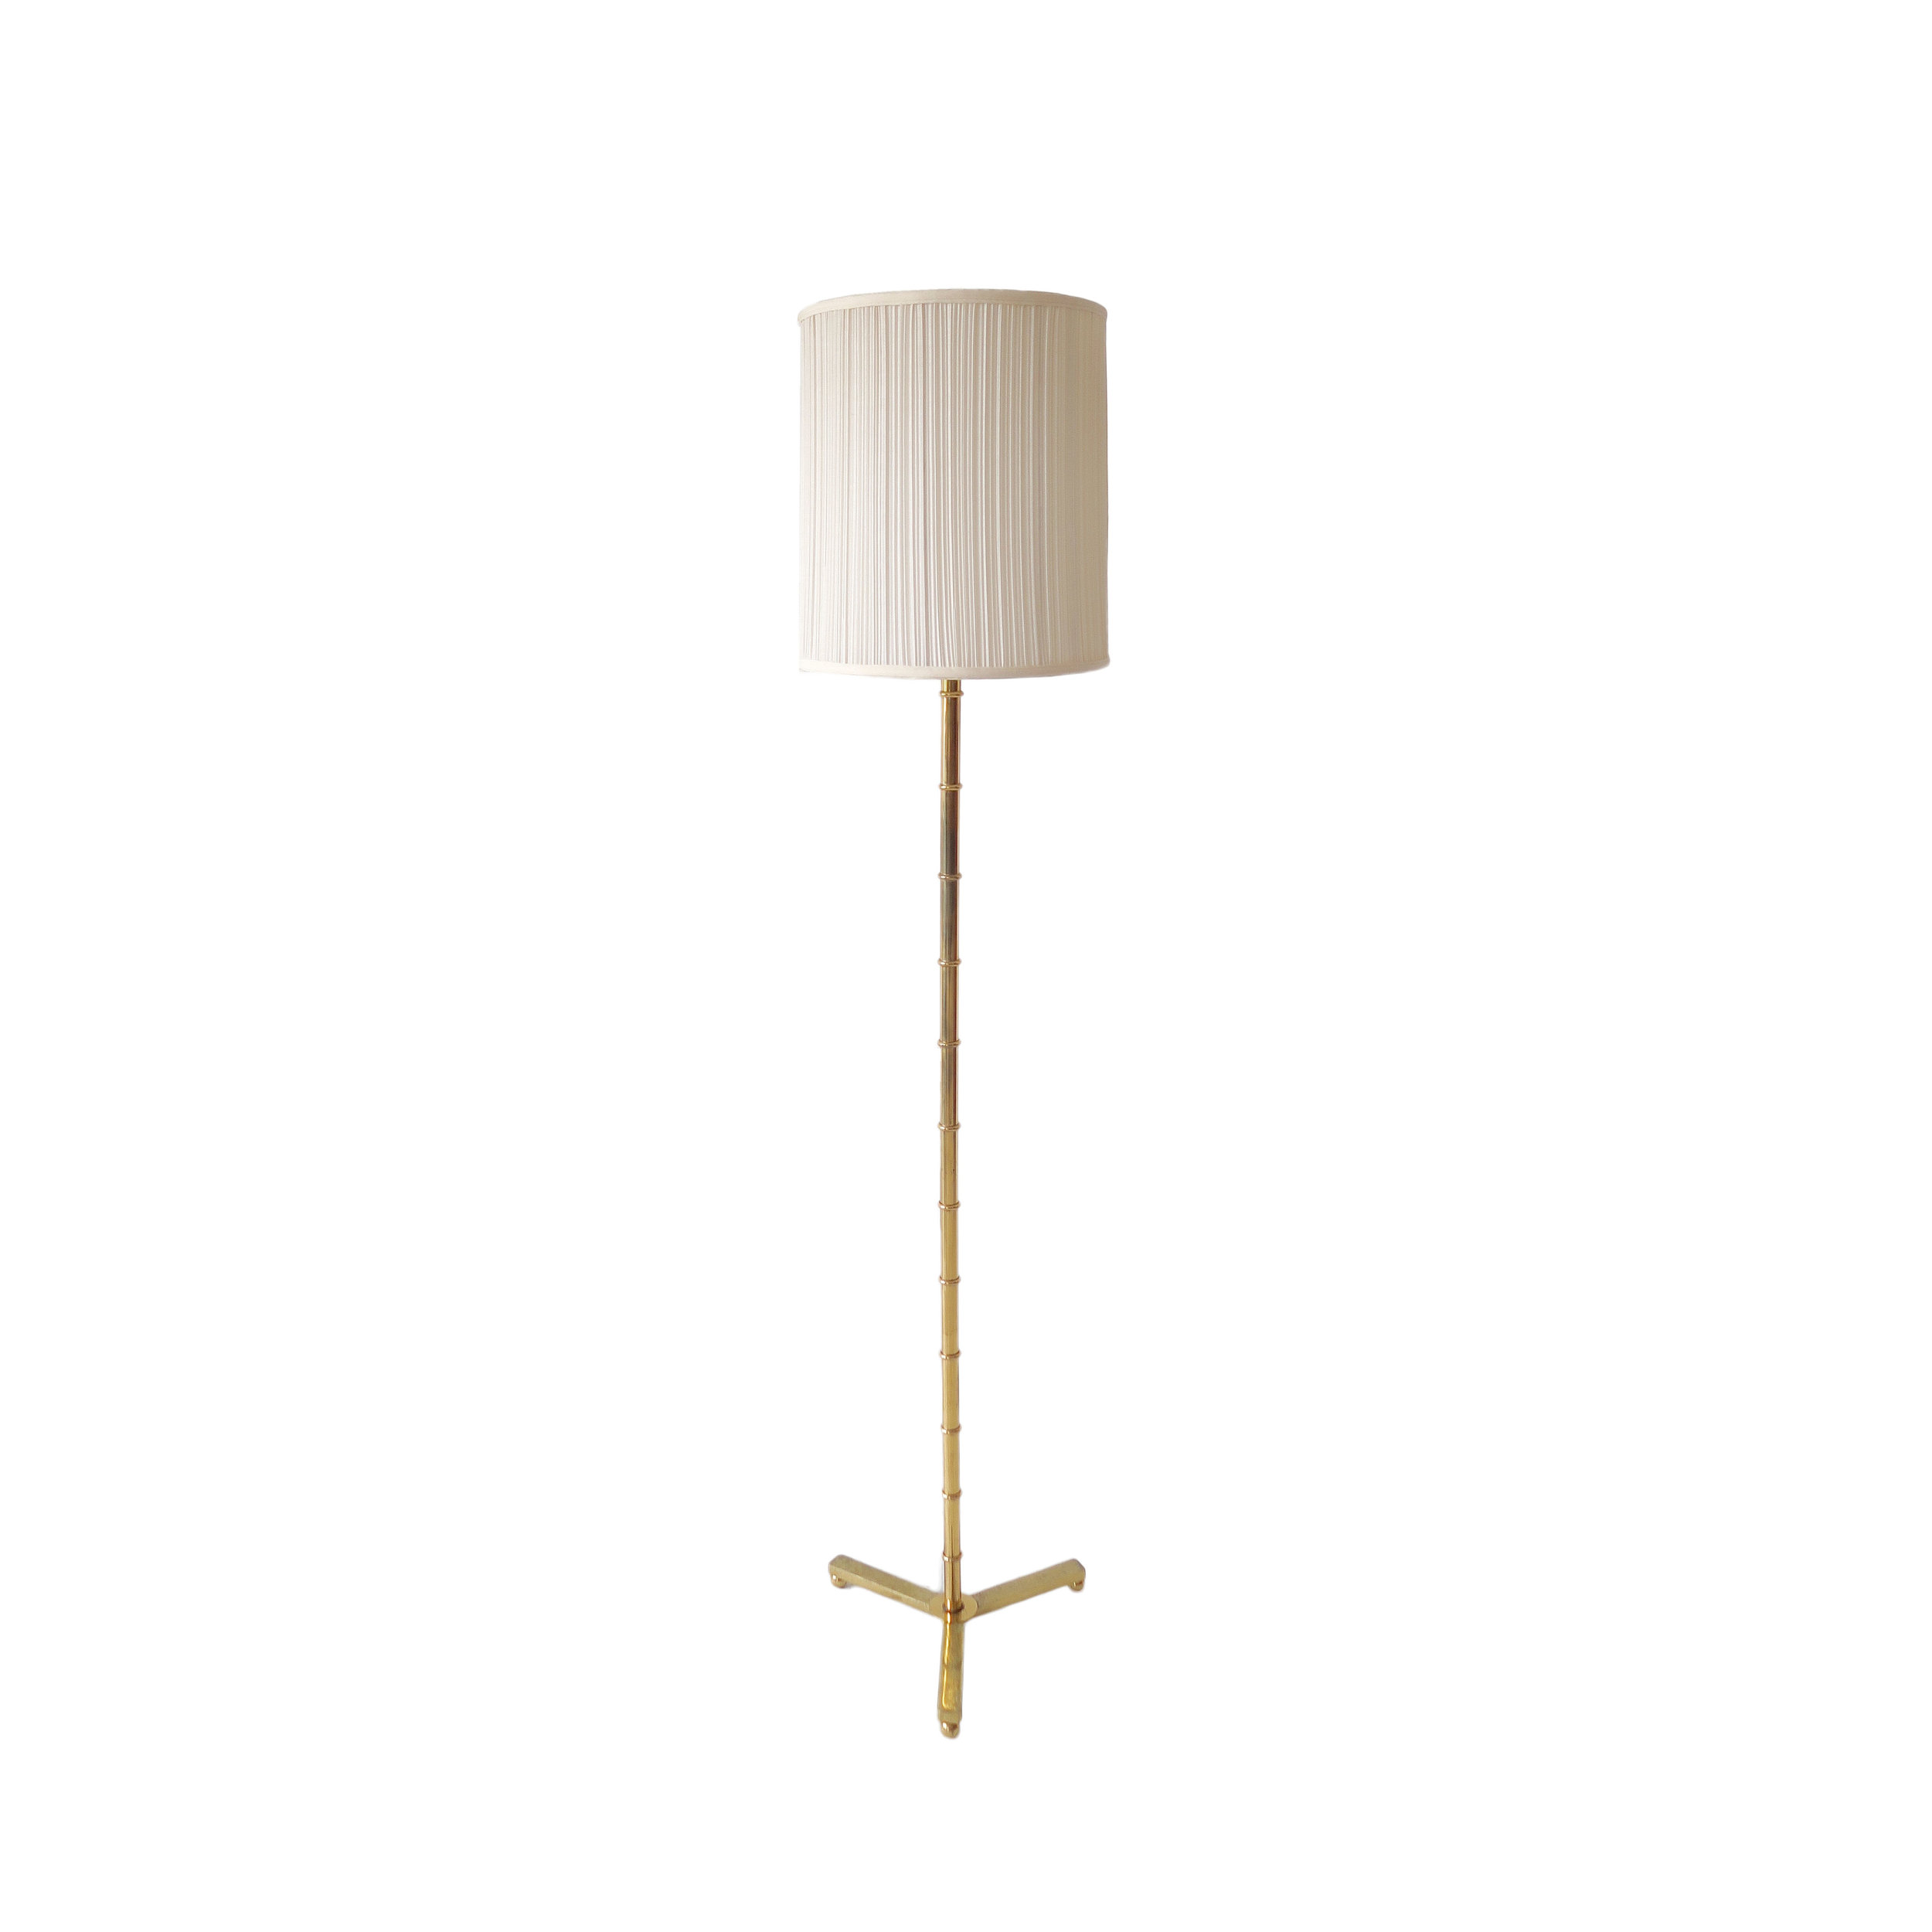 vintage brass bamboo floor lamp.jpg